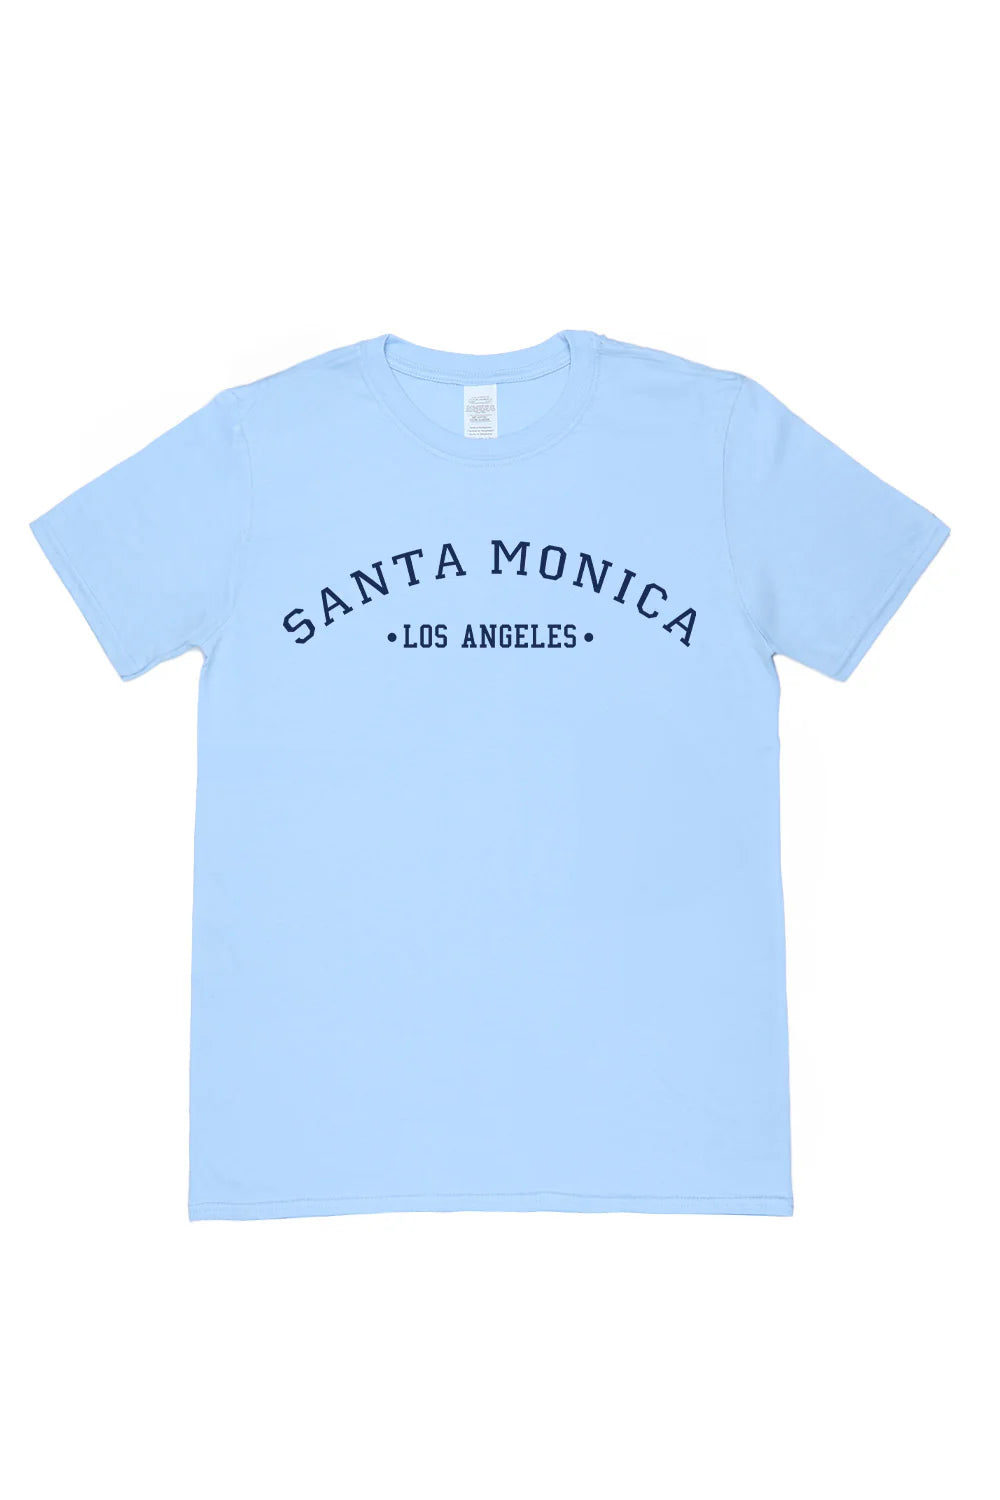 Santa Monica Los Angeles T-Shirt